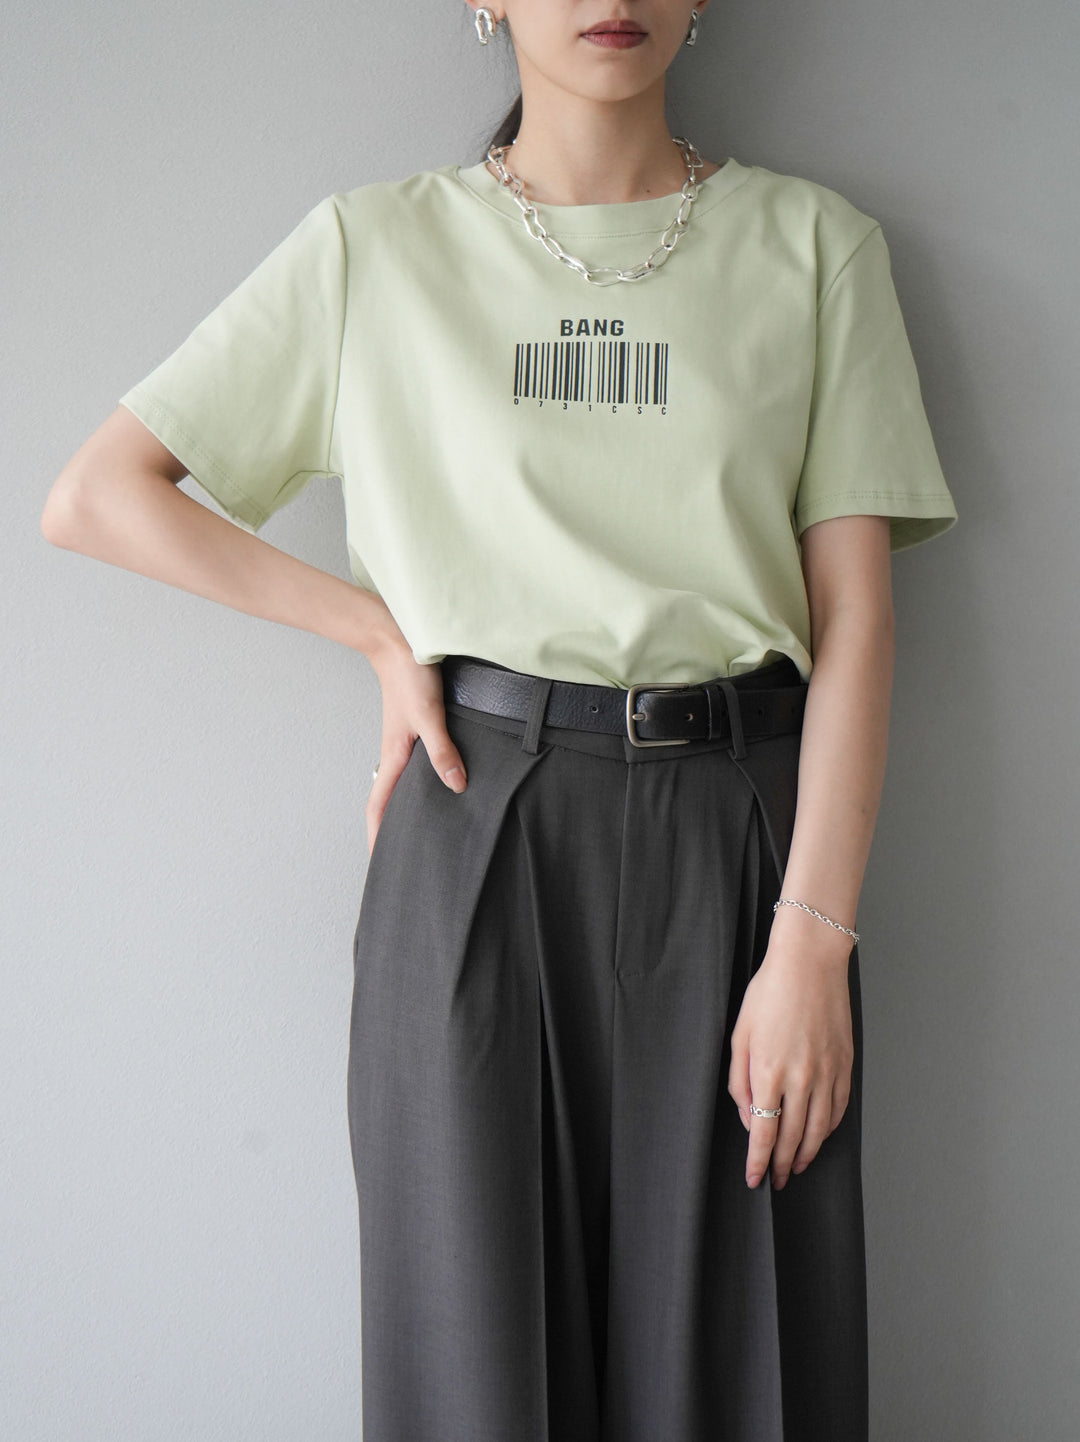 [Pre-order] Barcode Print T-shirt/Green